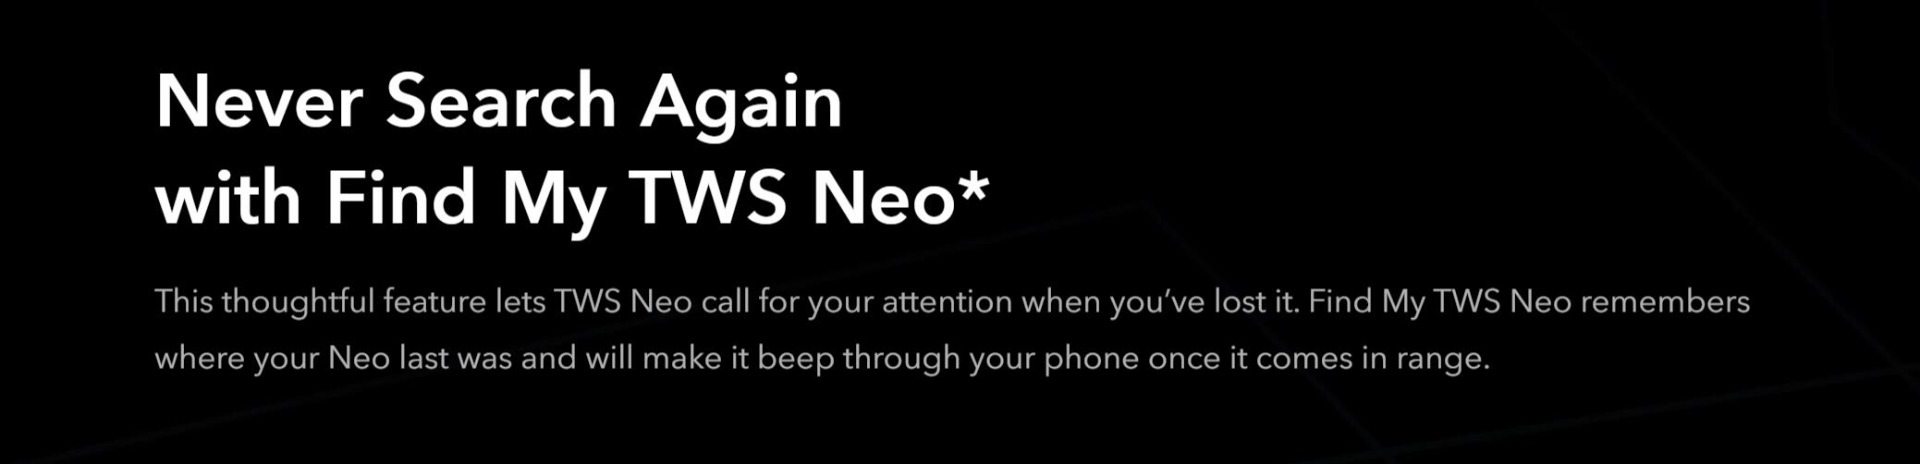 vivo TWS Neo Wireless Earbuds